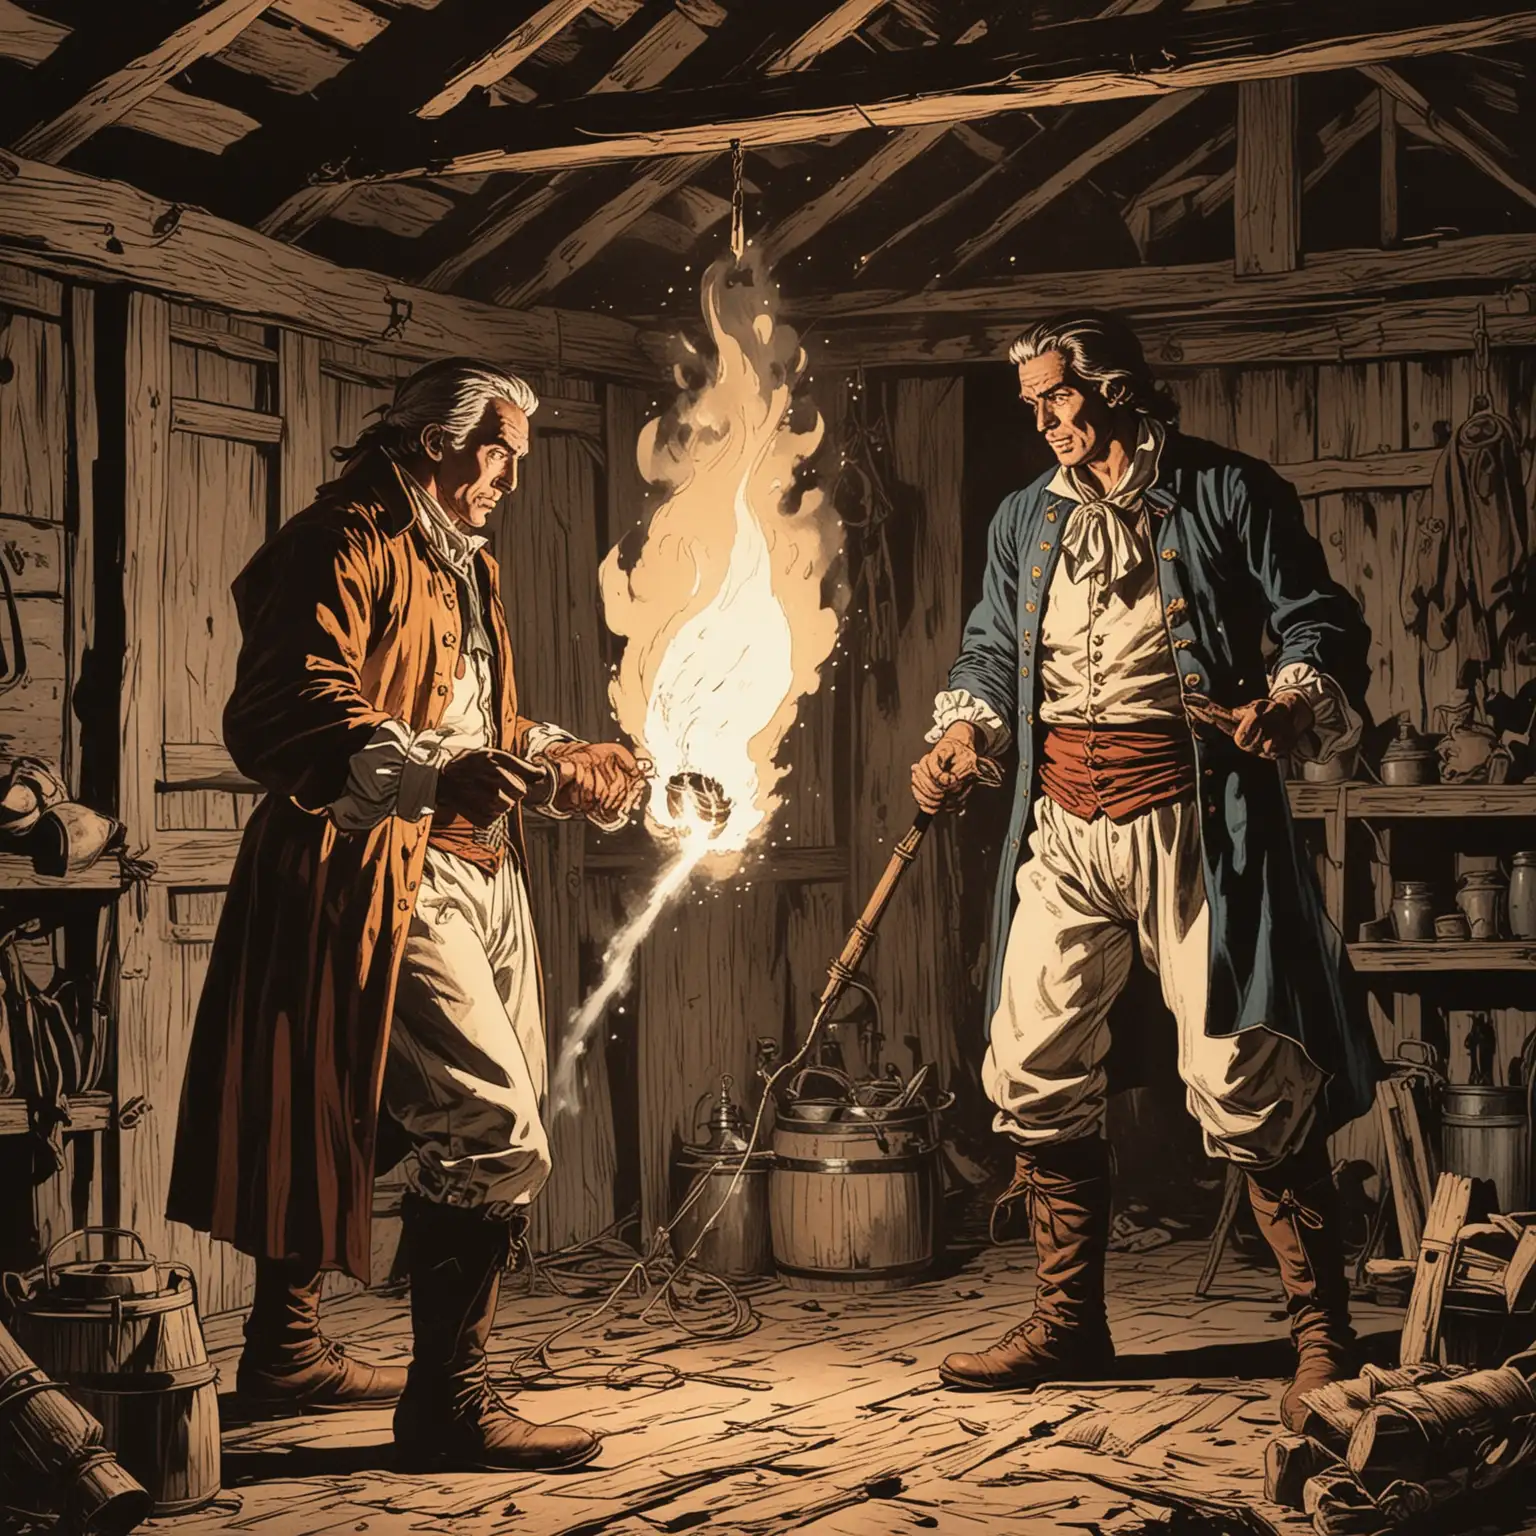 18th Century Men Lighting Fire in Barn Comic Book Art in John Buscema Style